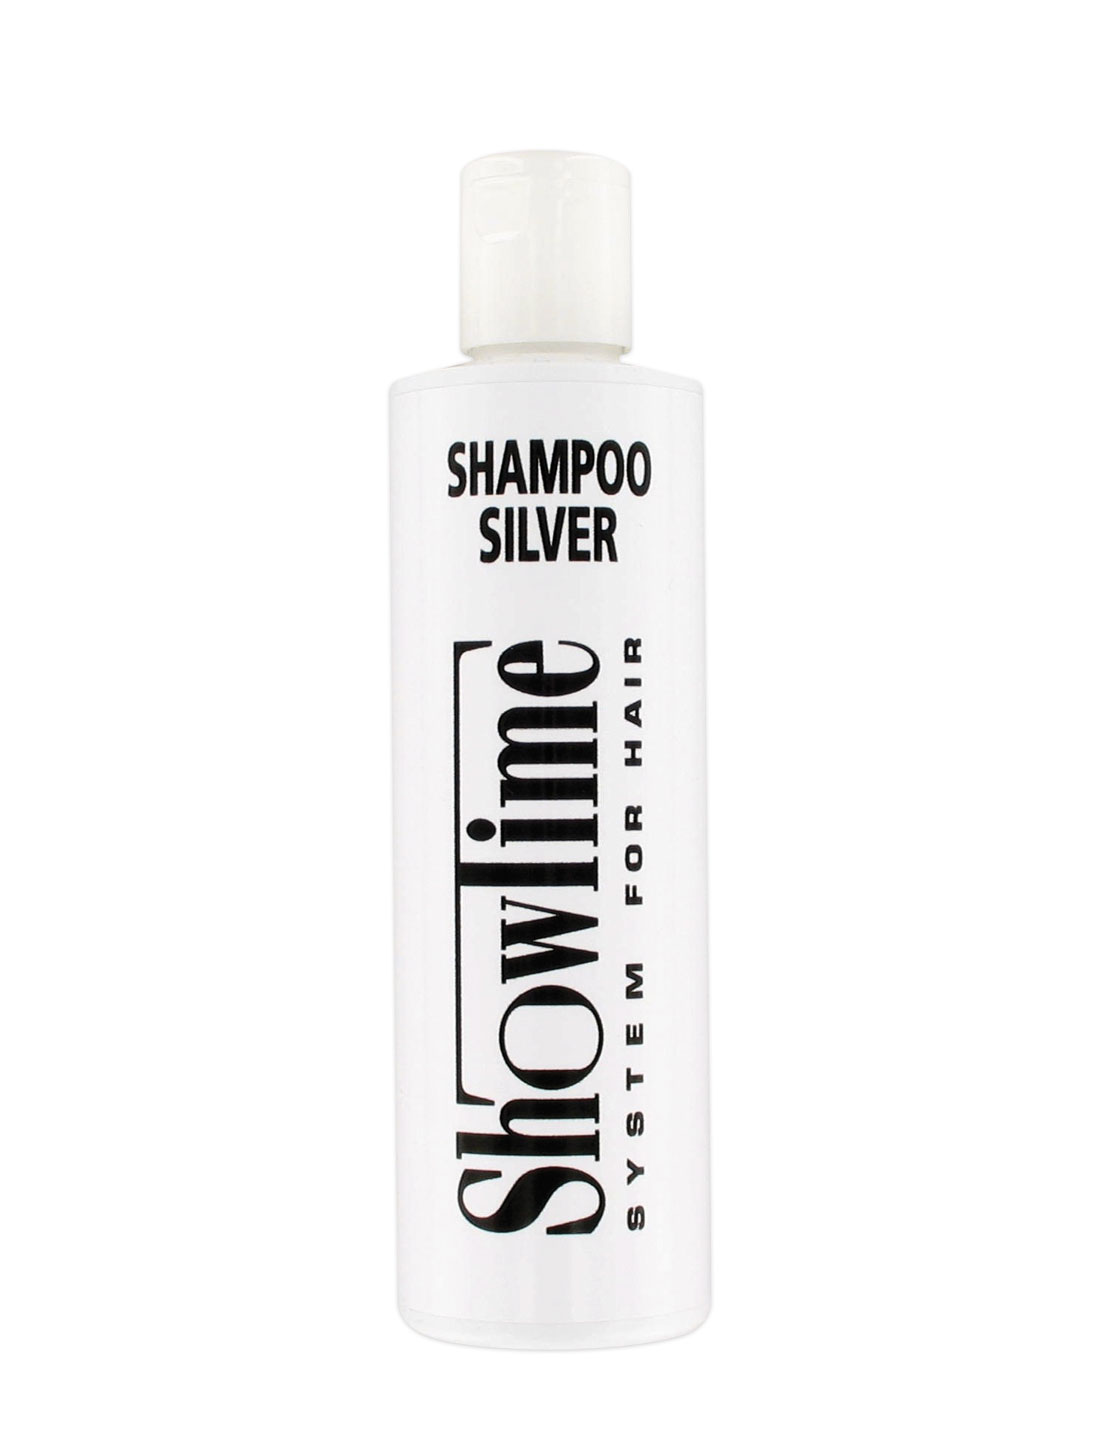 Silver shampoo Showtime